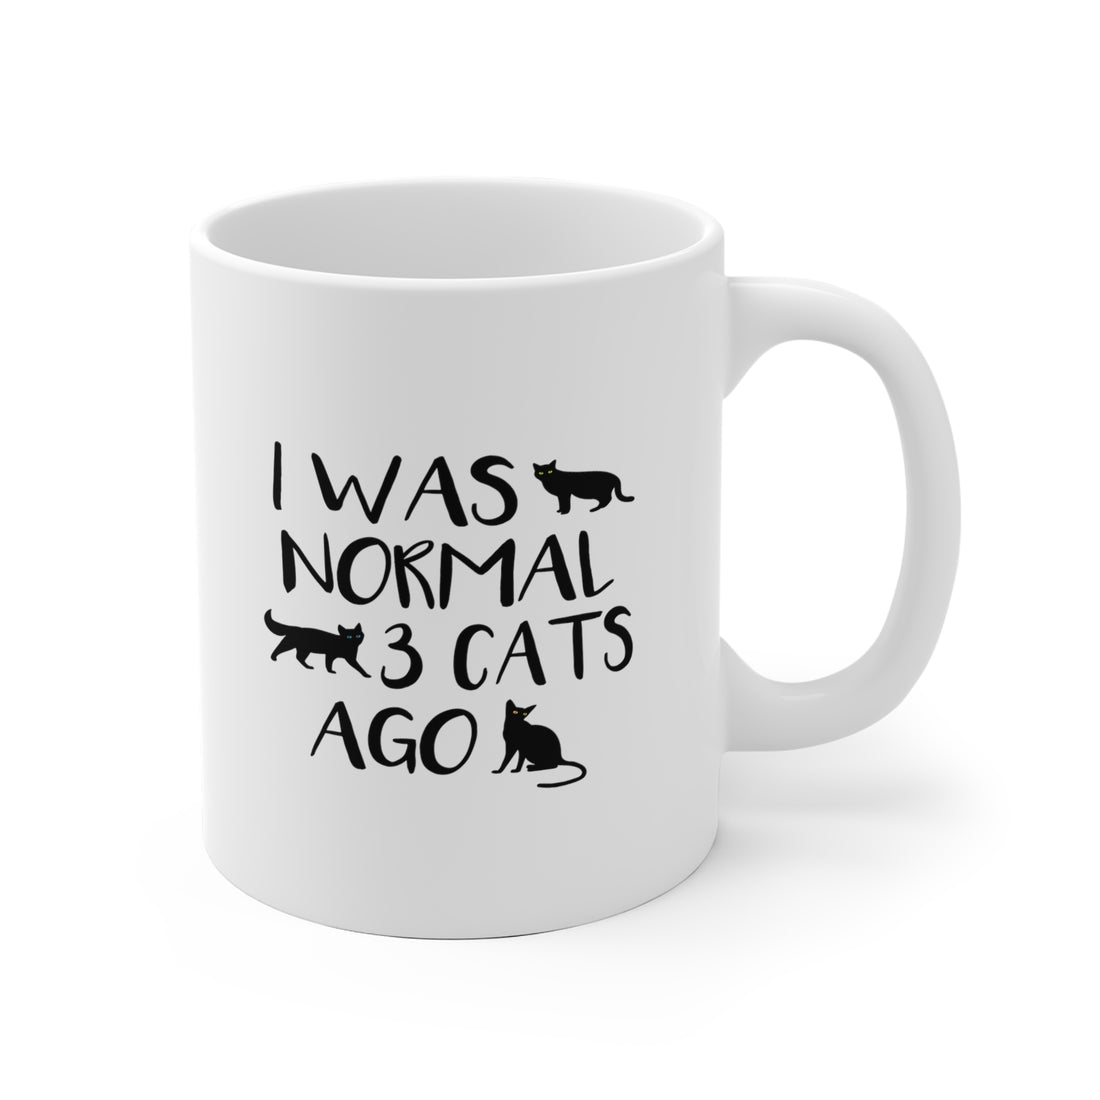 I Was Normal 3 Cats Ago - White Ceramic Mug 2 sizes Available